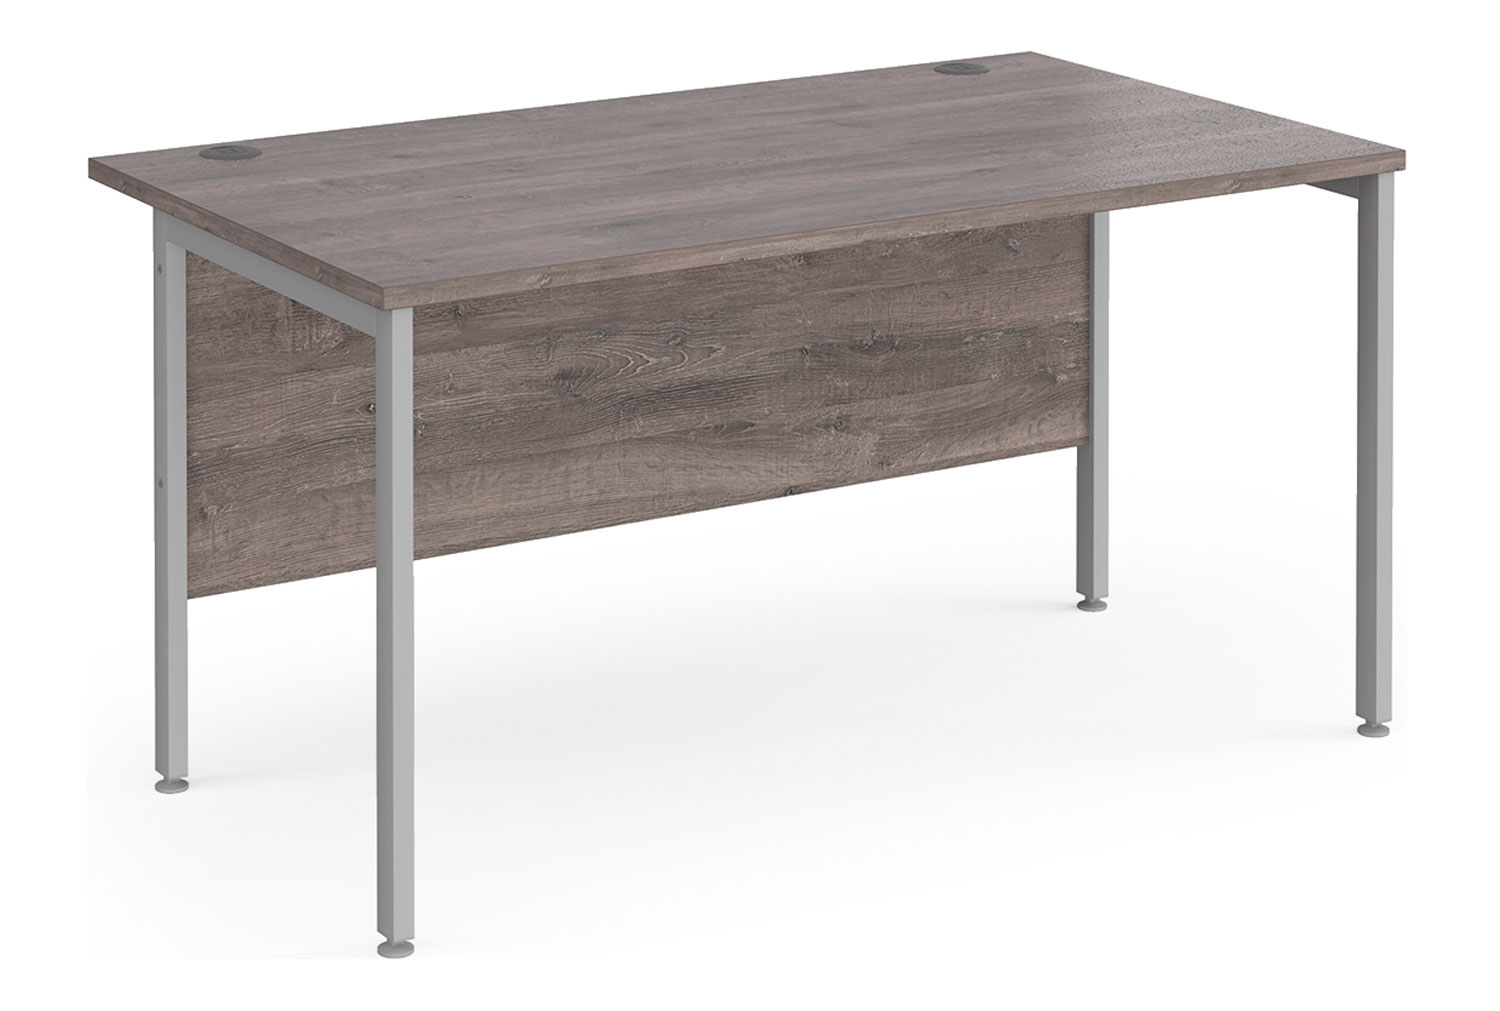 Value Line Deluxe H-Leg Rectangular Office Desk (Silver Legs), 140wx80dx73h (cm), Grey Oak